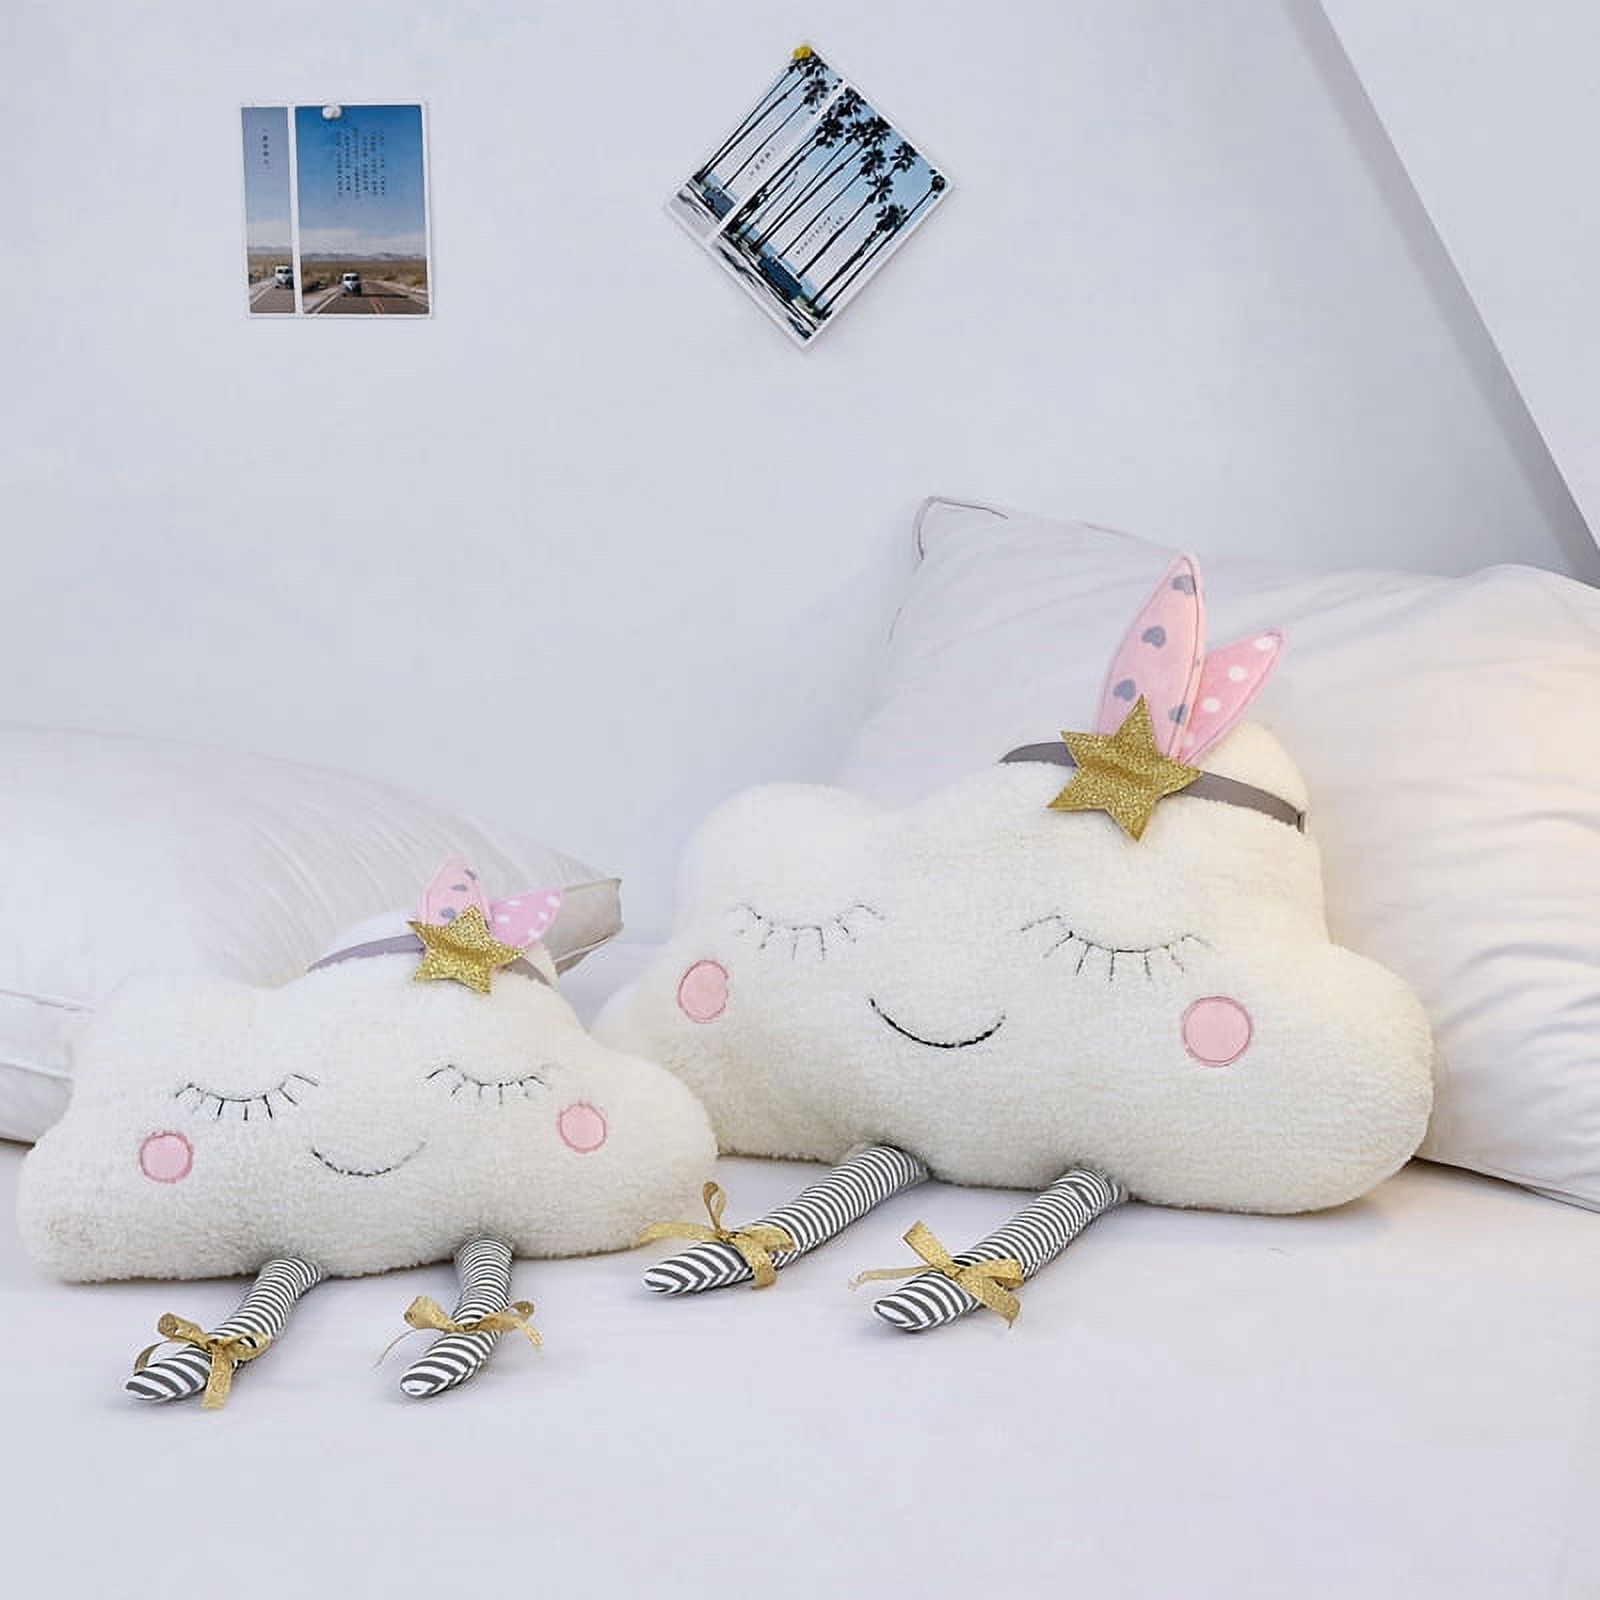 Children Cloud Cushion Soft Plush Cloud Shaped Pillow Stuffed Nursery Decor Home Decor for Bedroom Crib Party Supplies - White